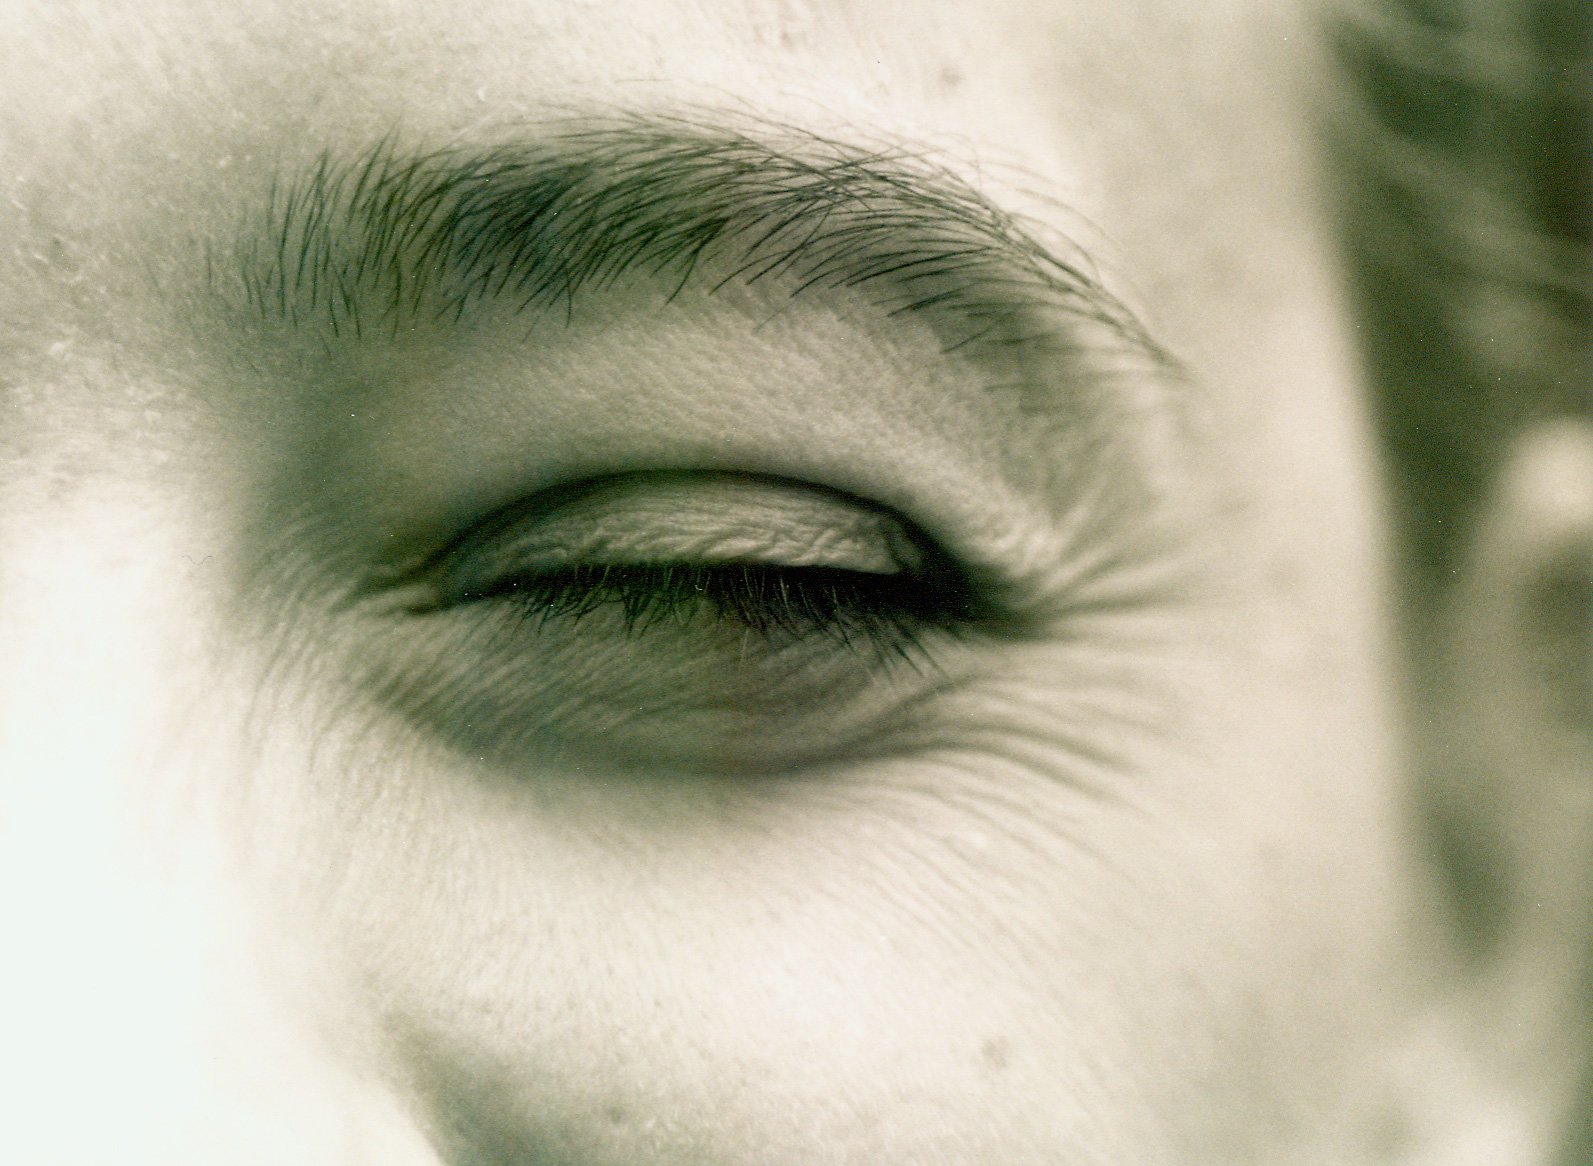 a man's face with a blurry eyeball